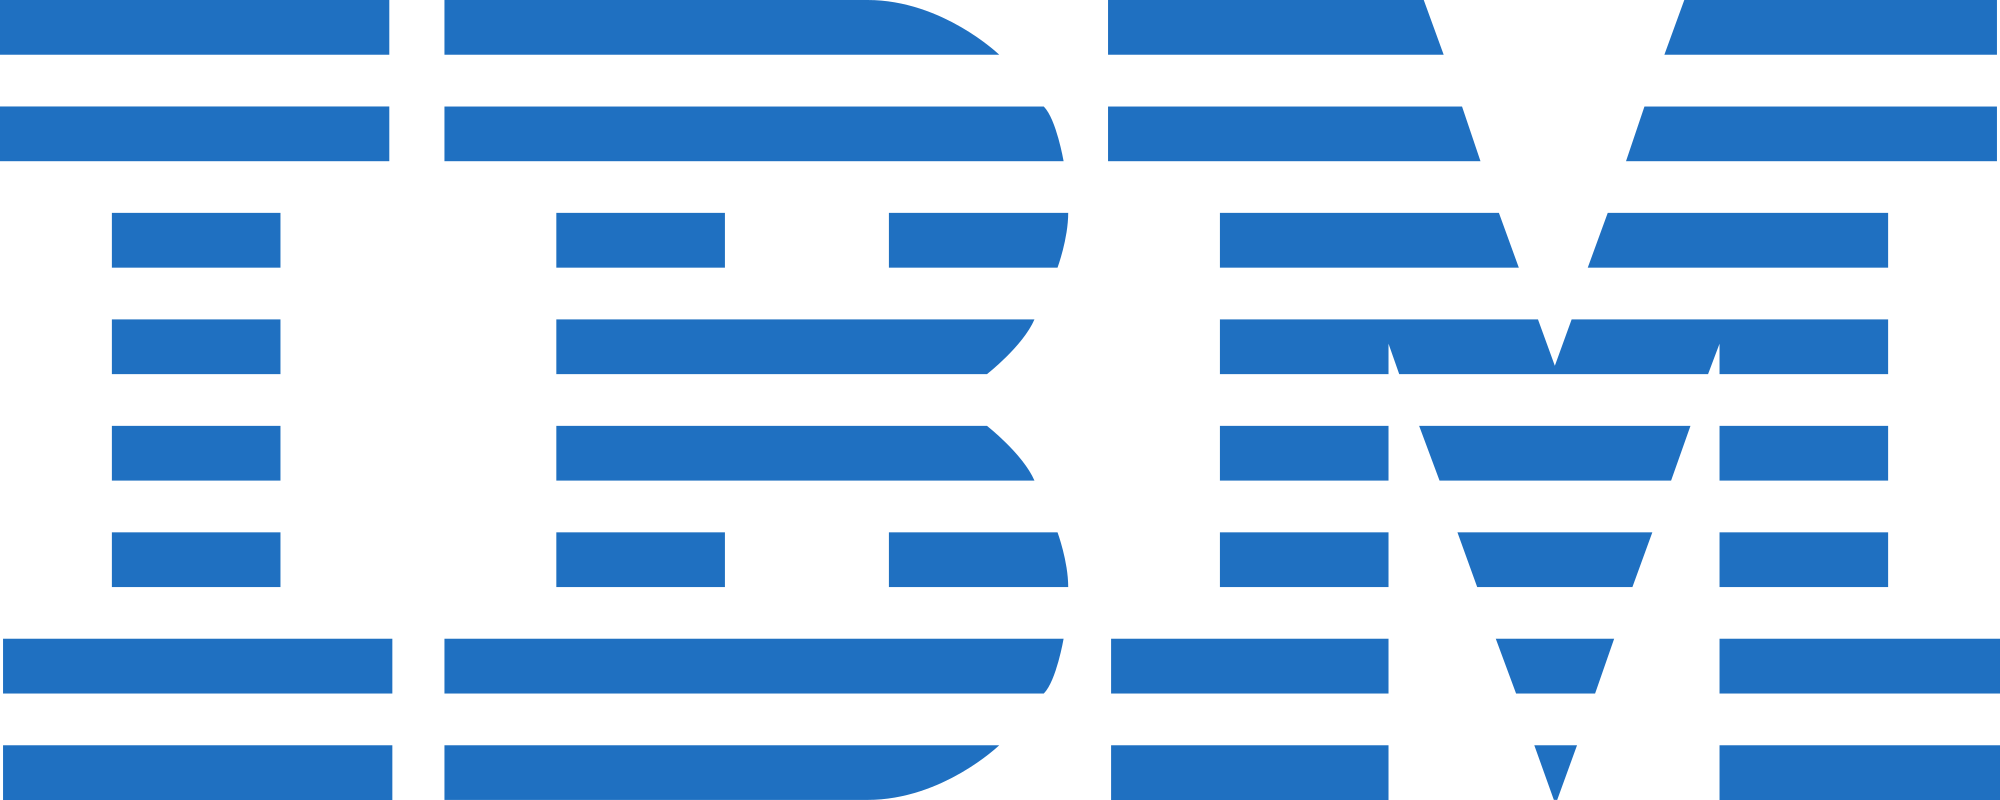 Ensah - IBM